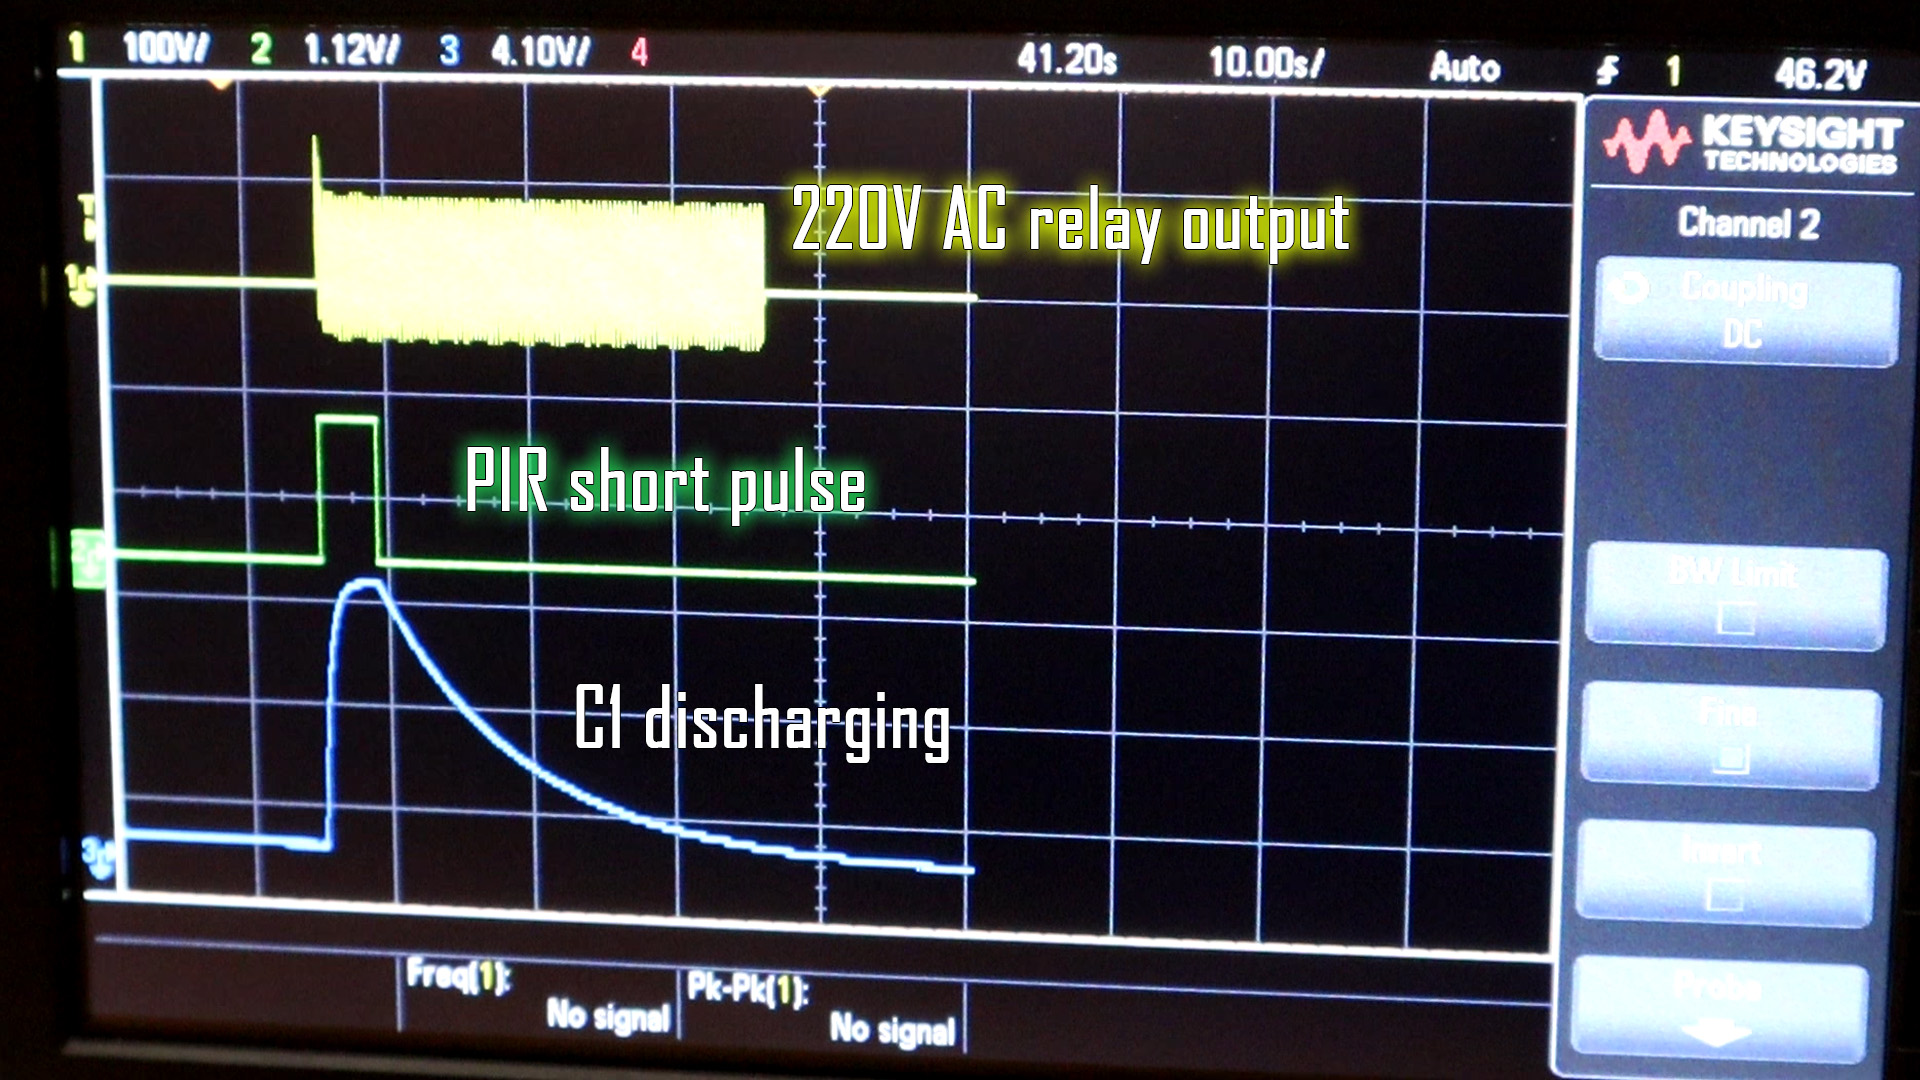 PIR delay infrared circuit detection